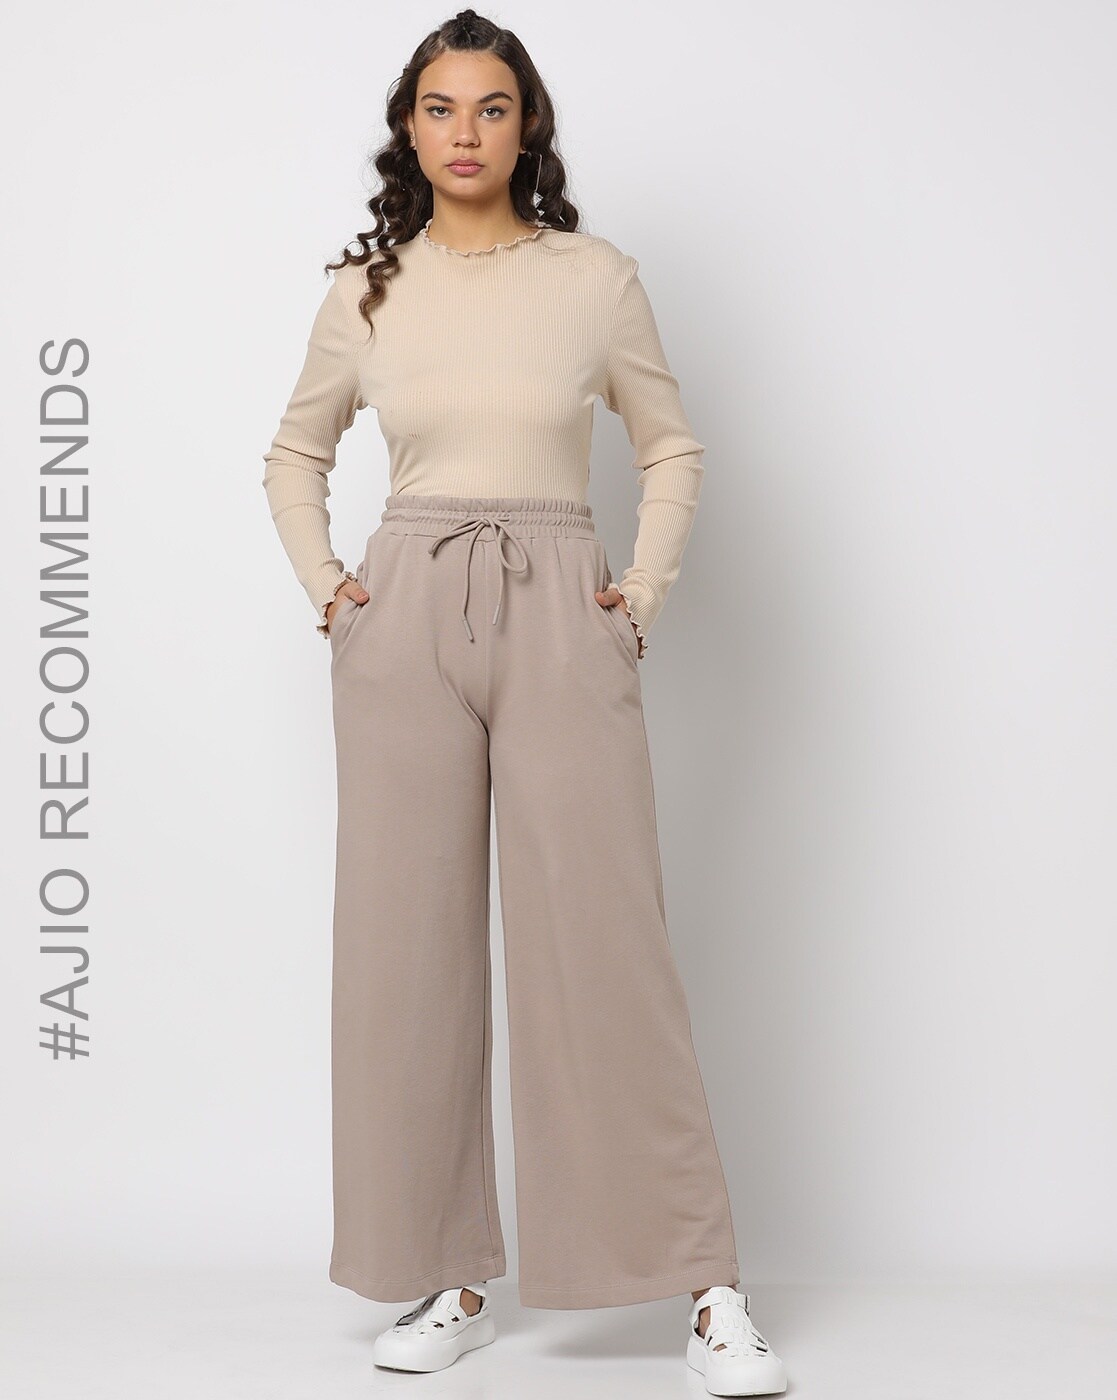 Buy Green Trousers & Pants for Women by Vero Moda Online | Ajio.com